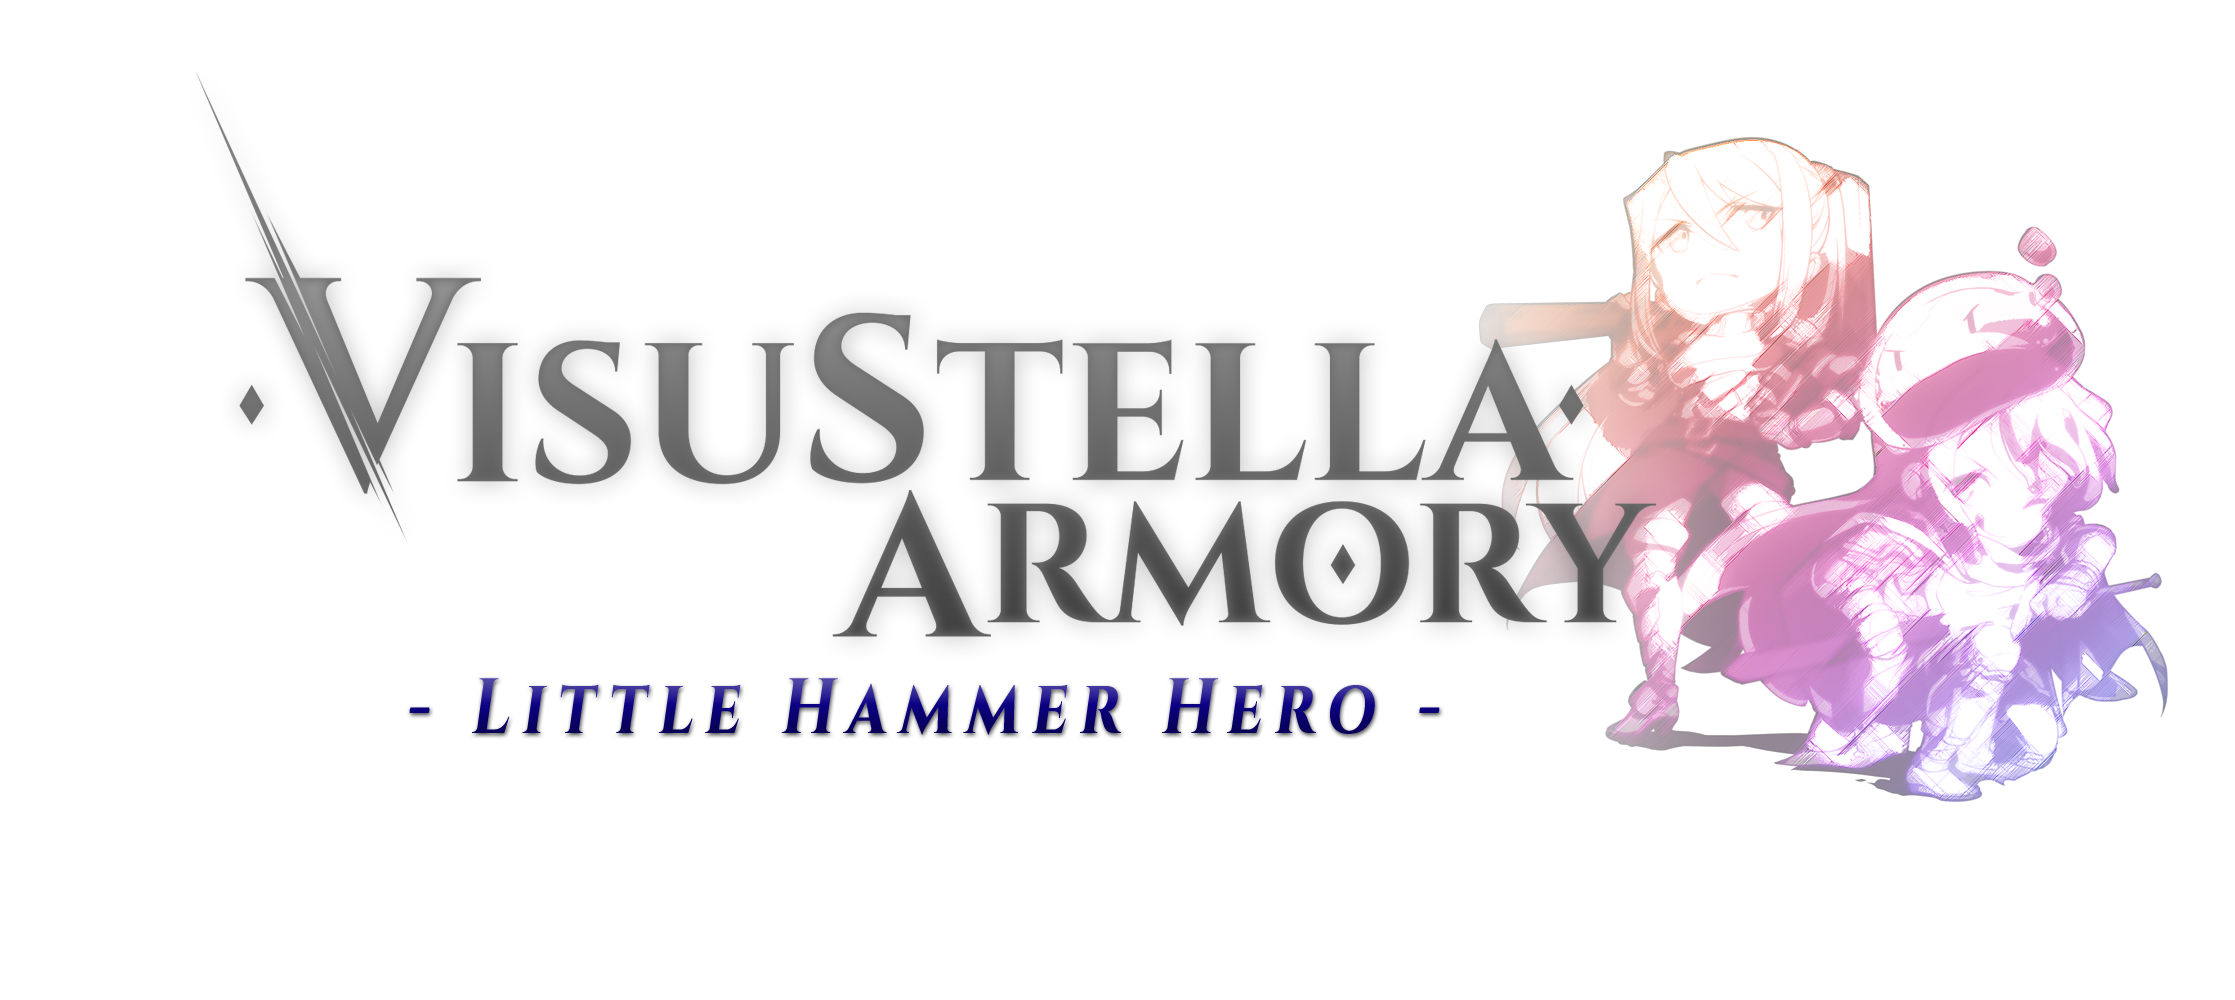 VisuStella Armory: Little Hammer Hero